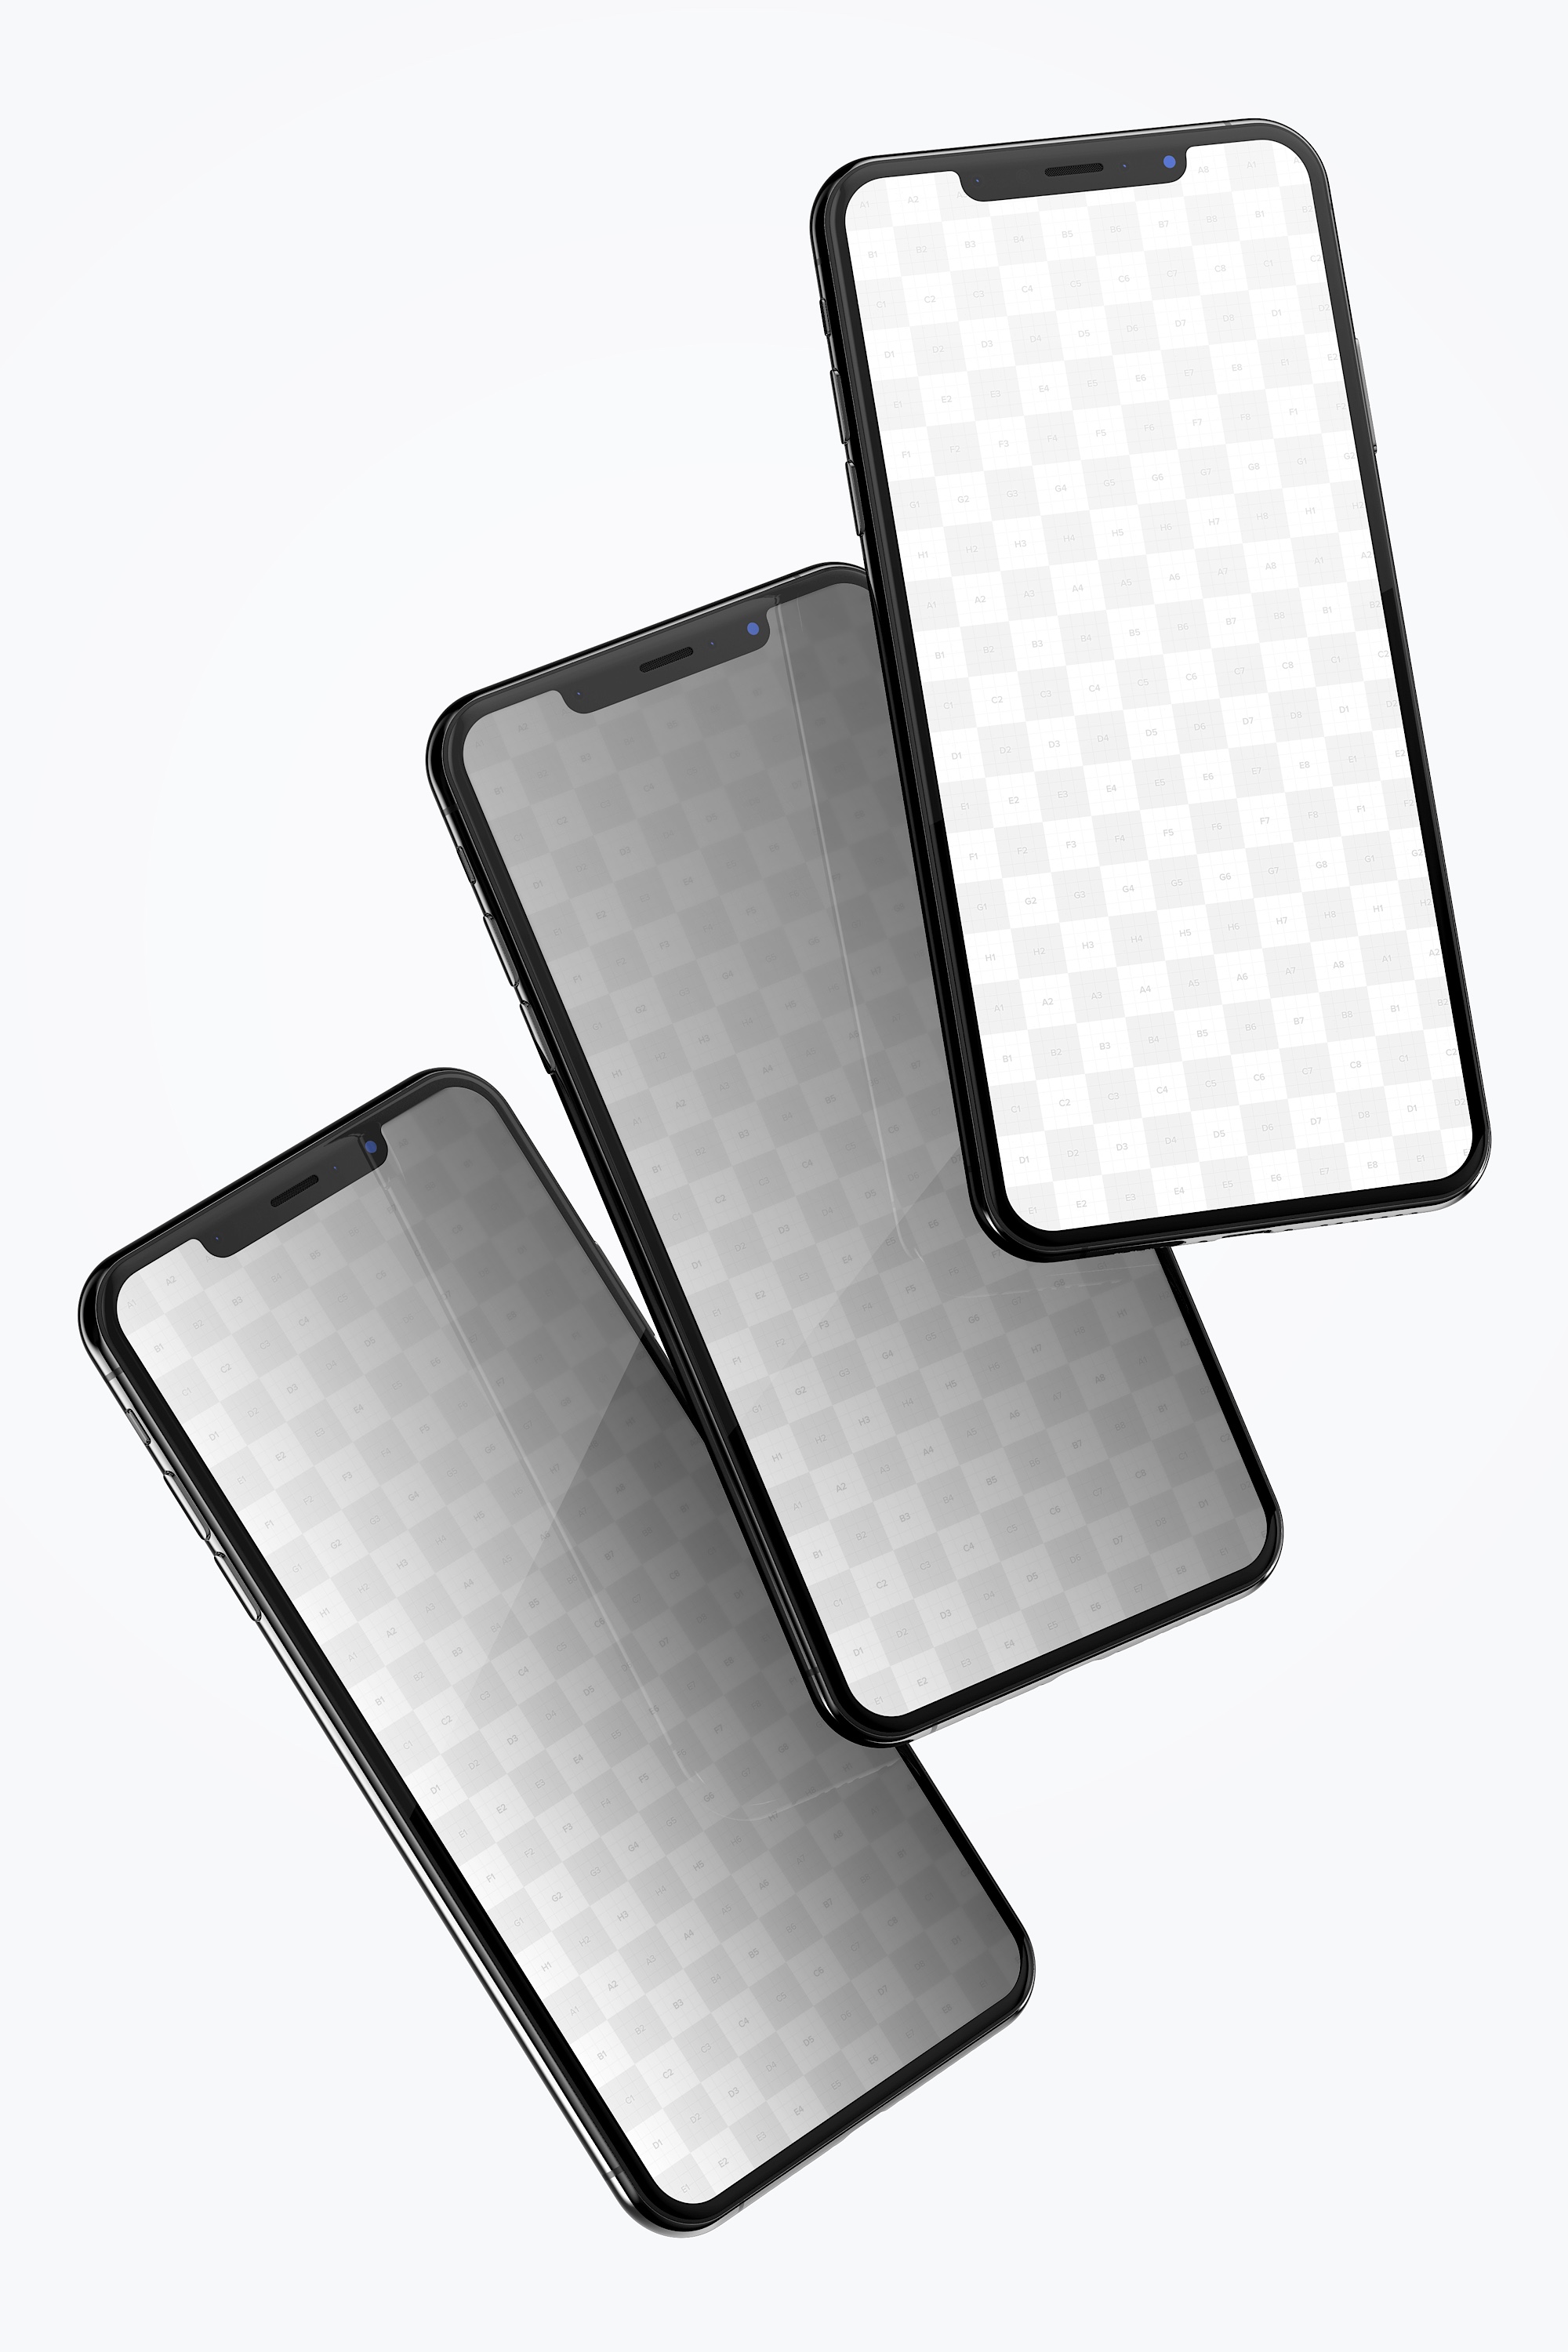 iPhone XS Max手机多屏显示UI设计效果图样机08 iPhone XS Max Mockup 08插图(1)